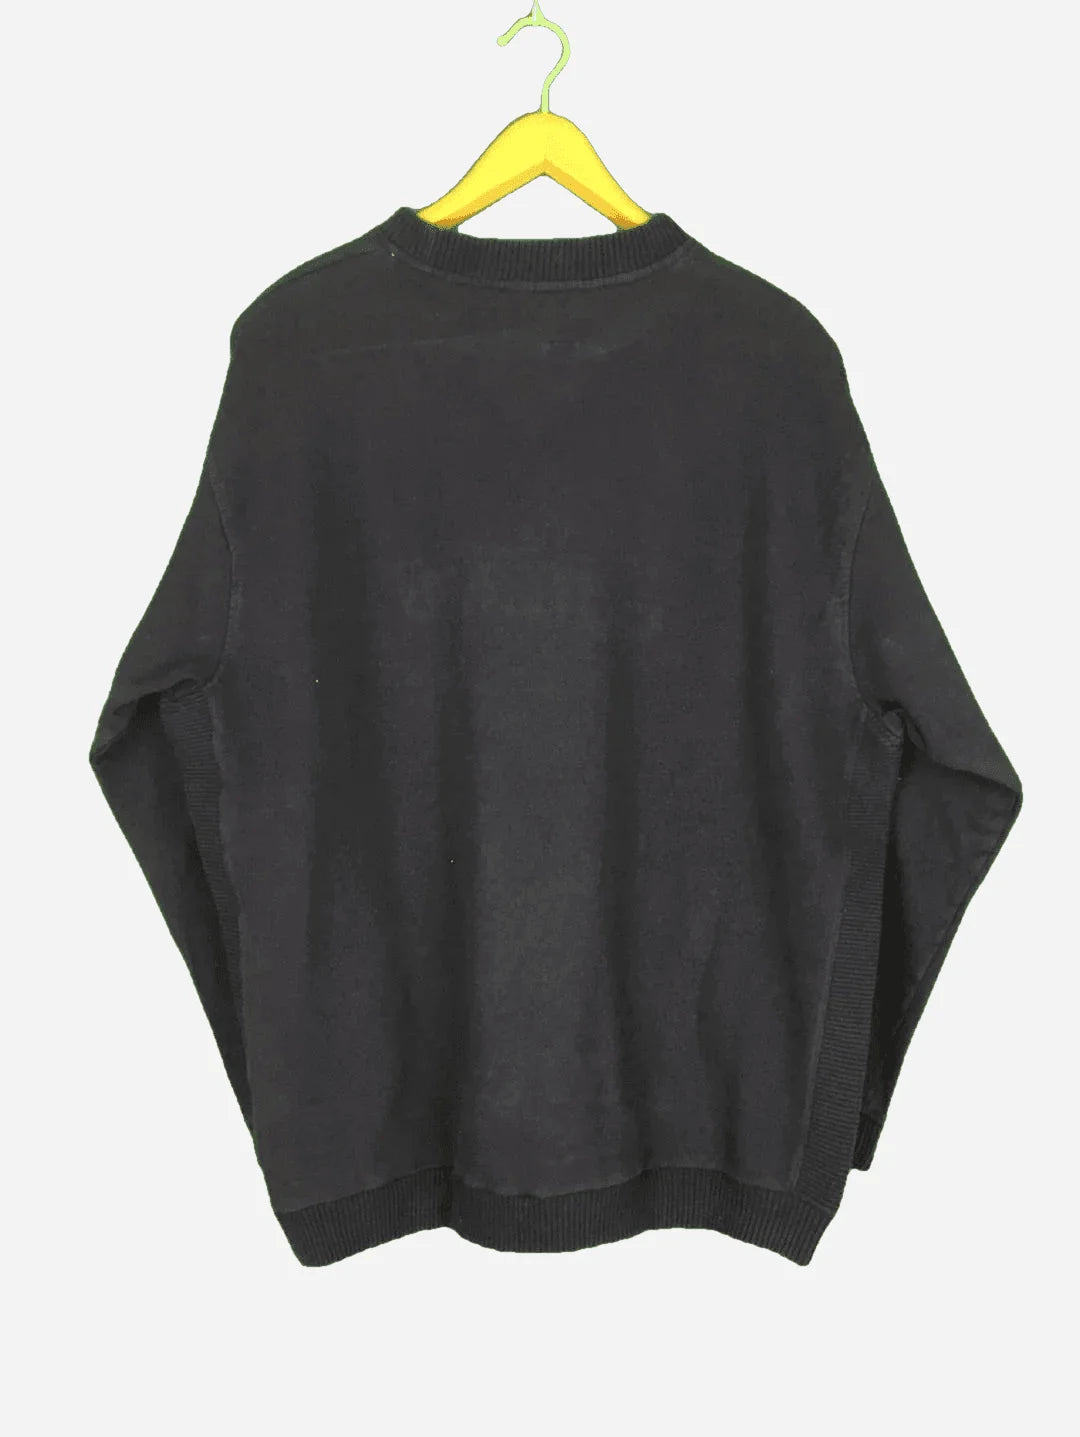 „Knockout“ Sweater (L)